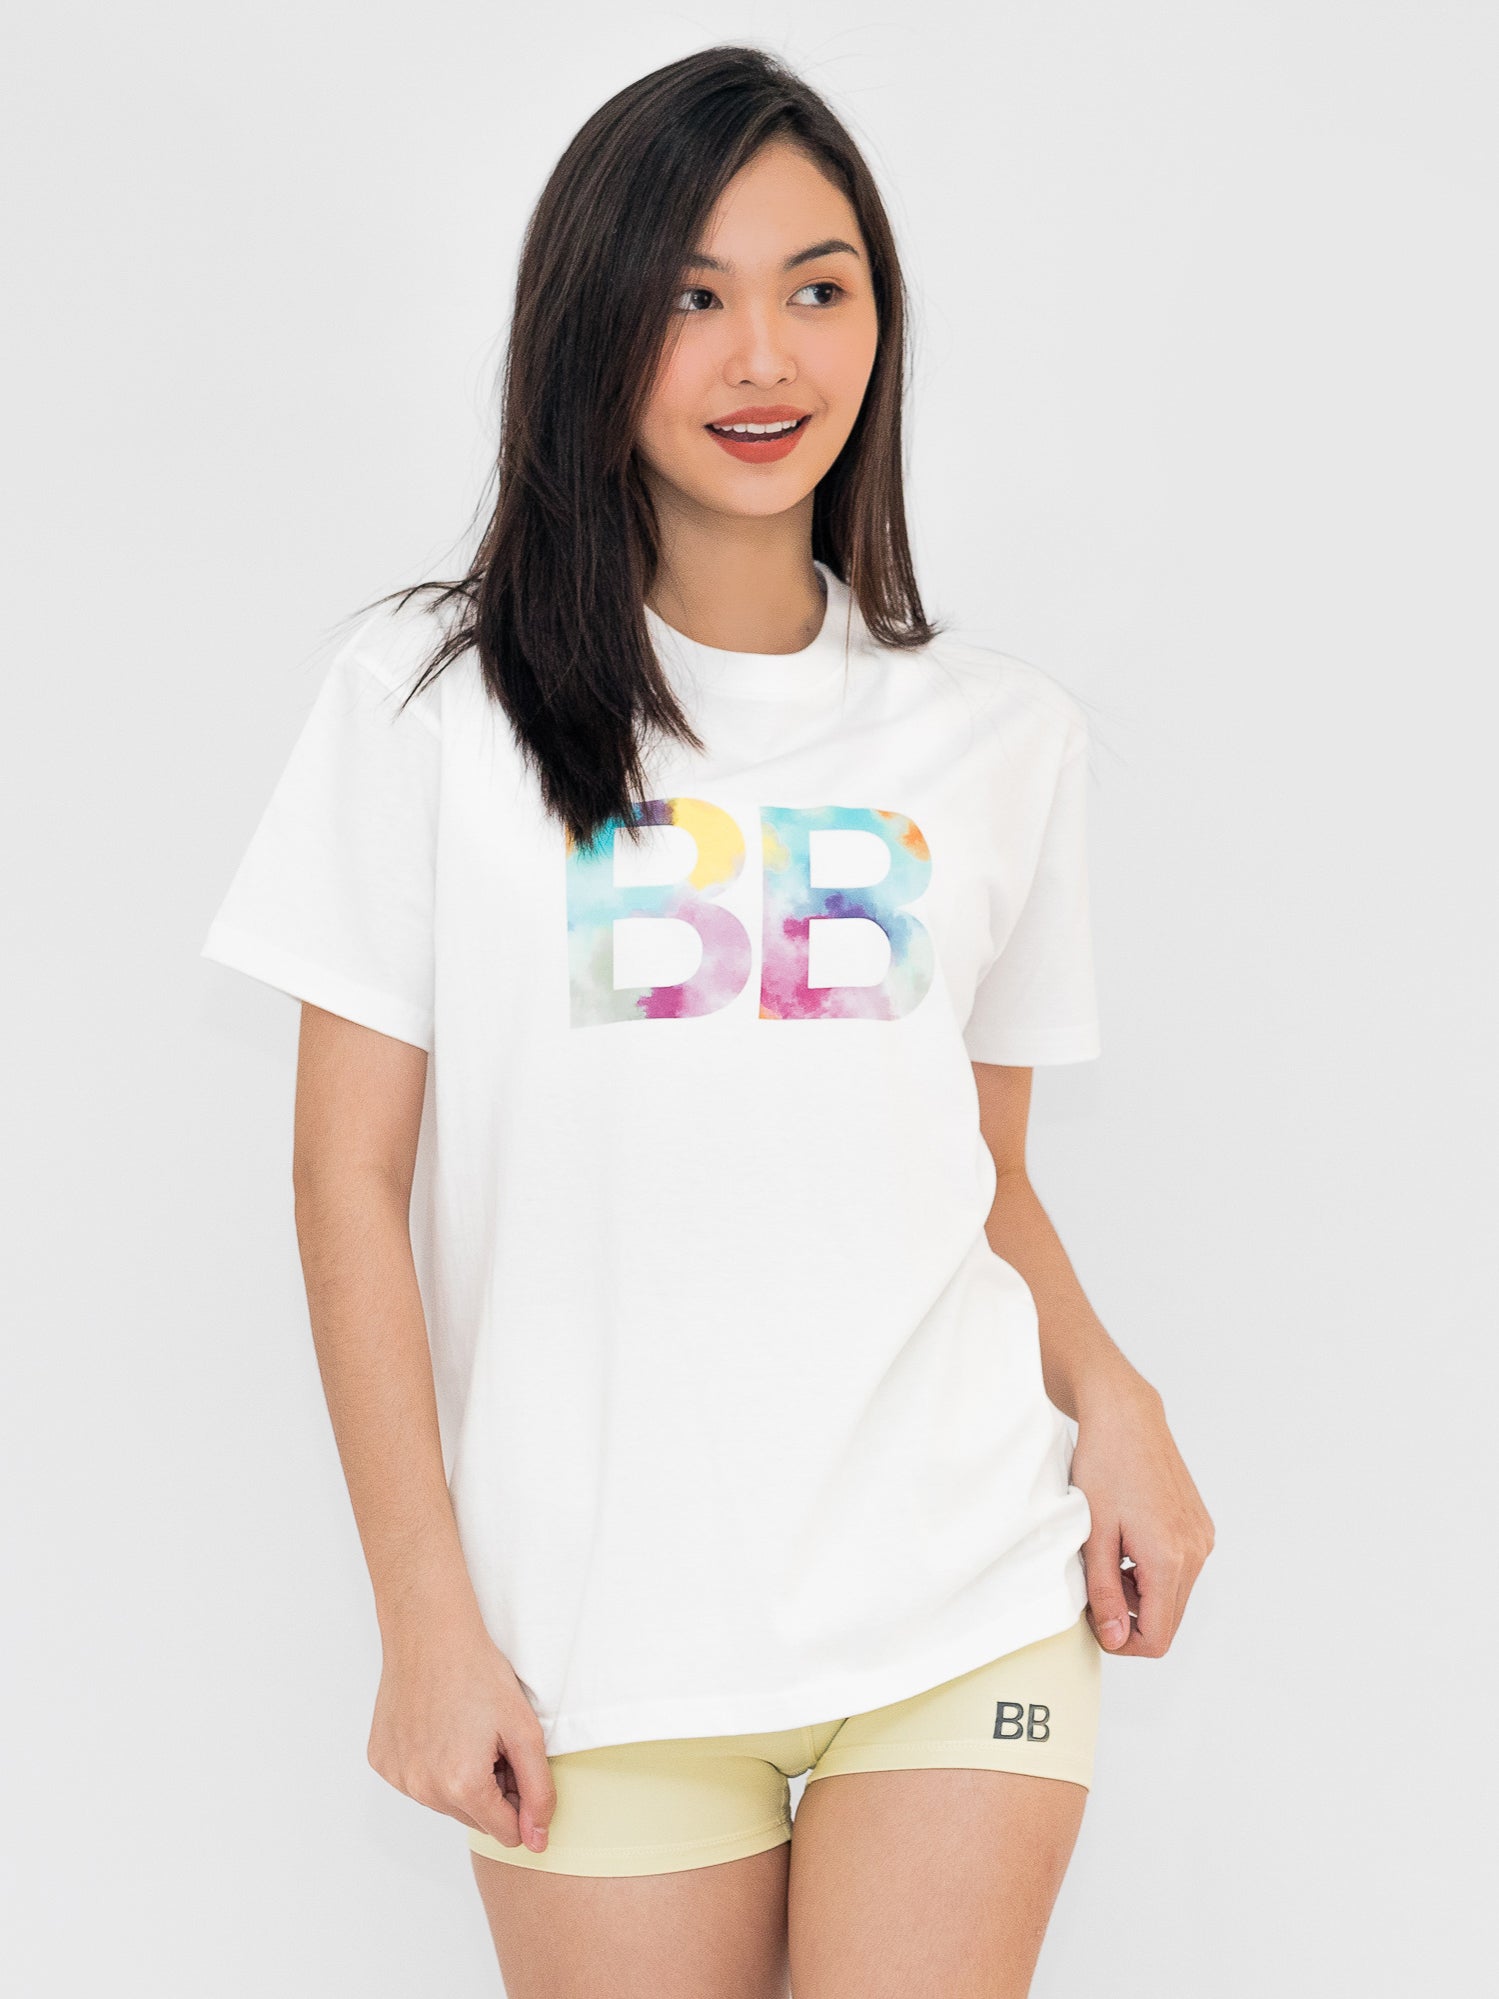 BB Rainbow Tie Dyed Shirt